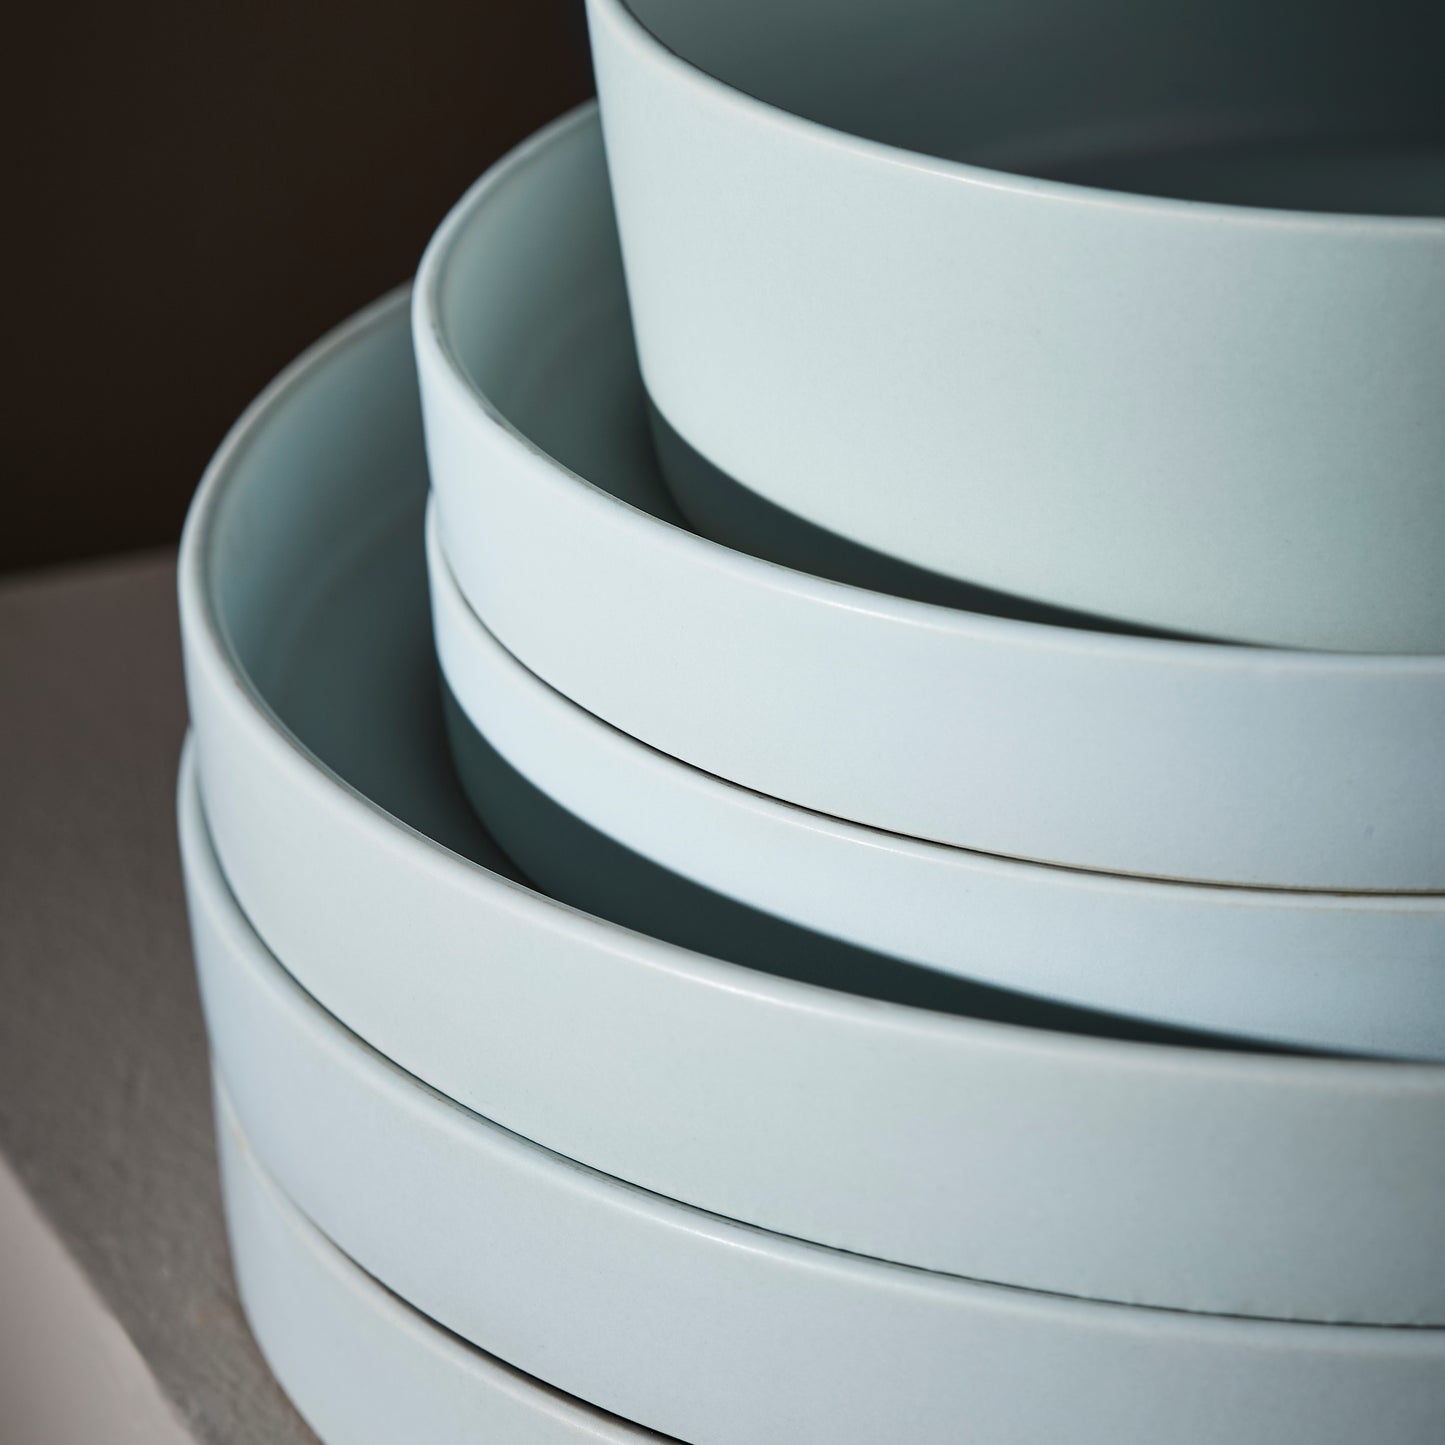 Modan Stoneware Dinnerware Set - Blue-Grey